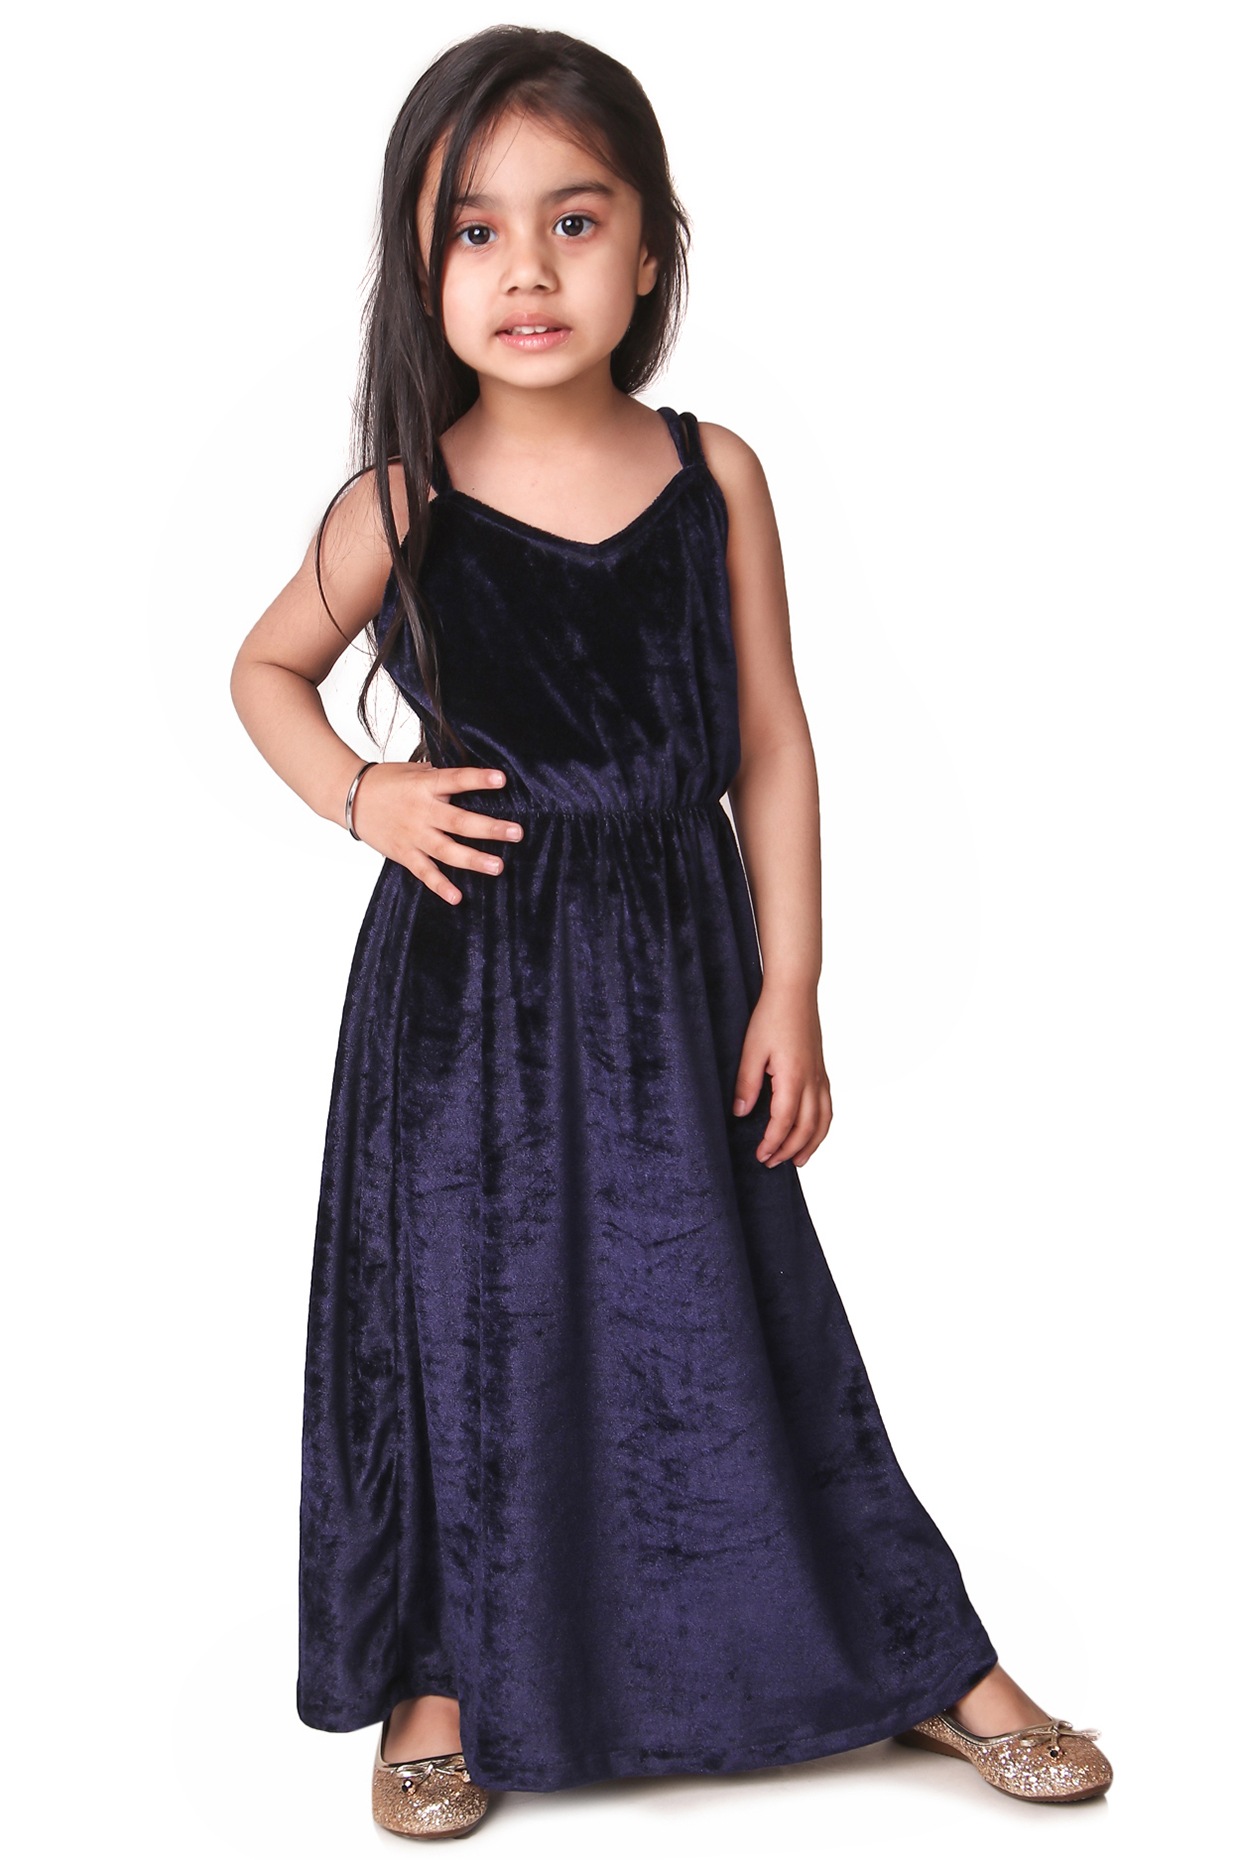 Blue Velvet Gown for Young Girls #37324 | Buy Online @ DesiClik.com, USA